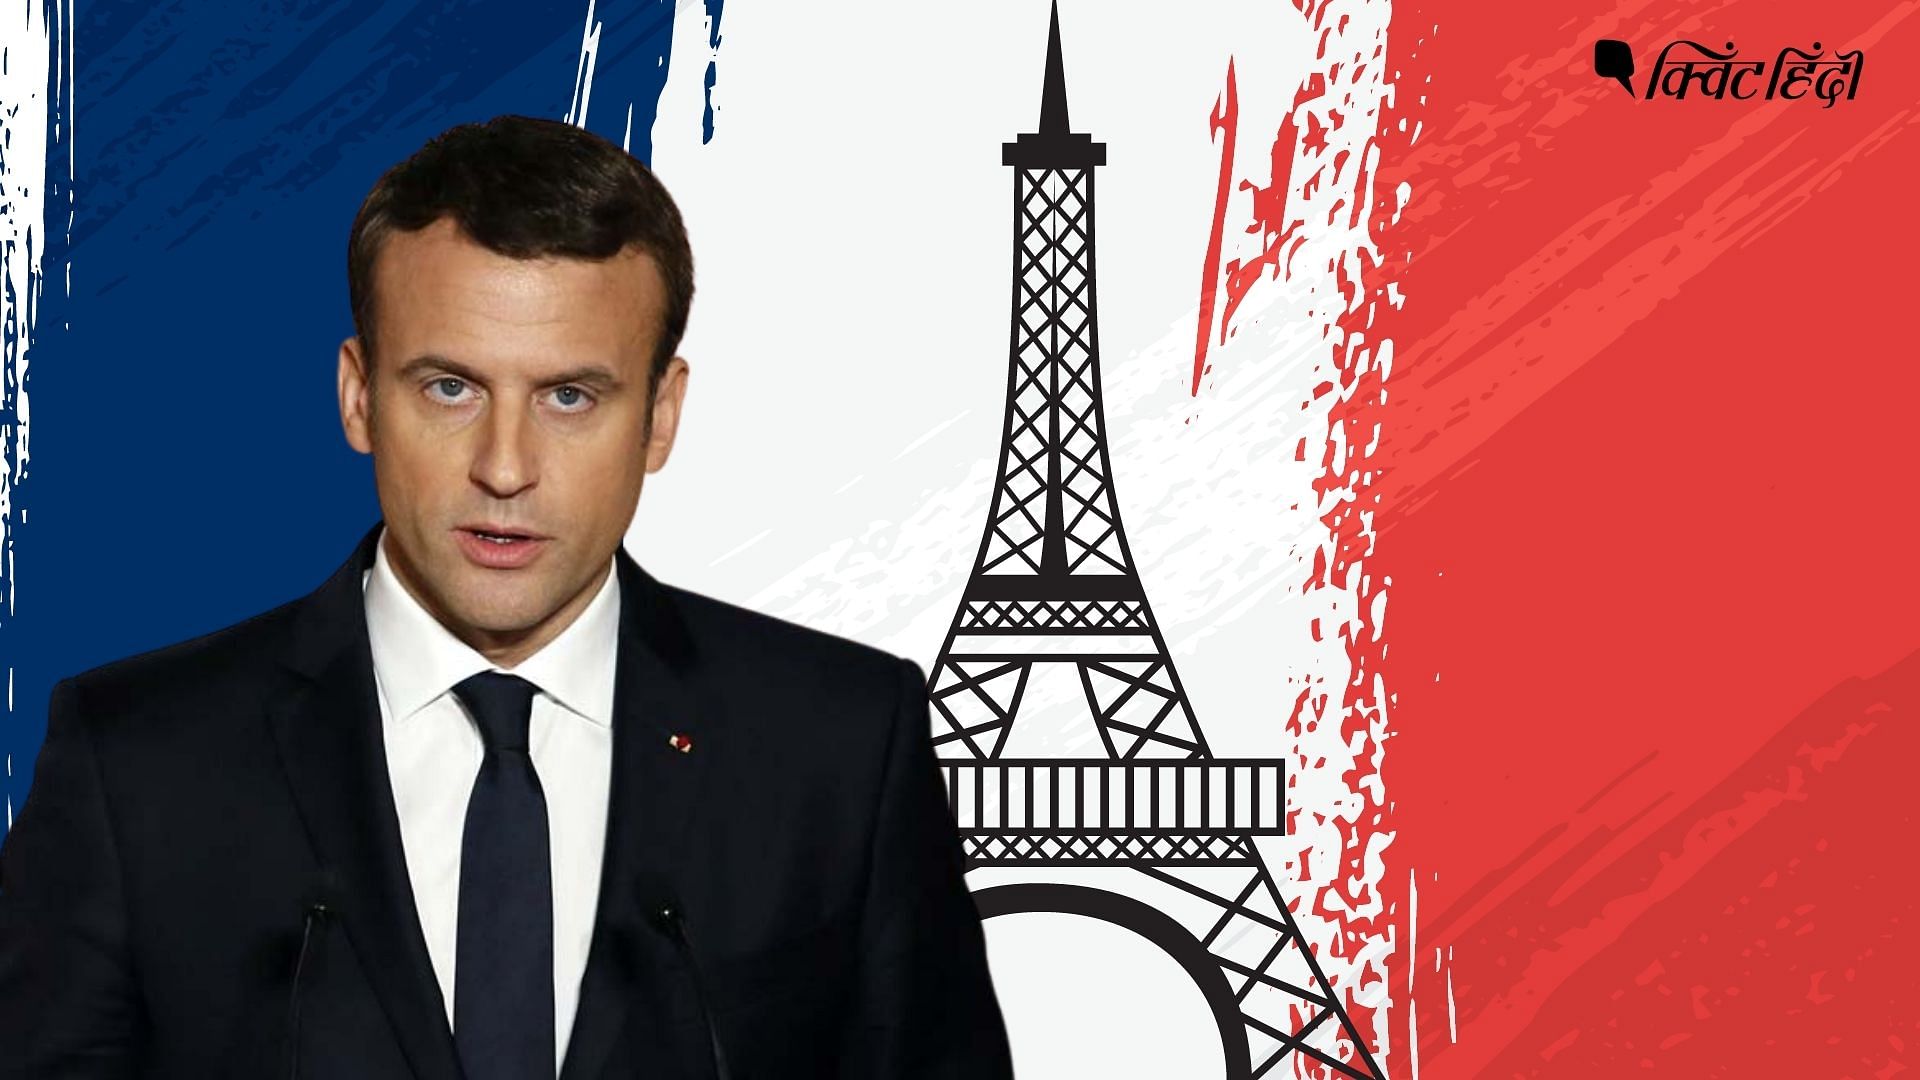 <div class="paragraphs"><p>France election 2022: Emmanuel Macron ने लगातार दूसरी बार जीता राष्ट्रपति चुनाव</p></div>